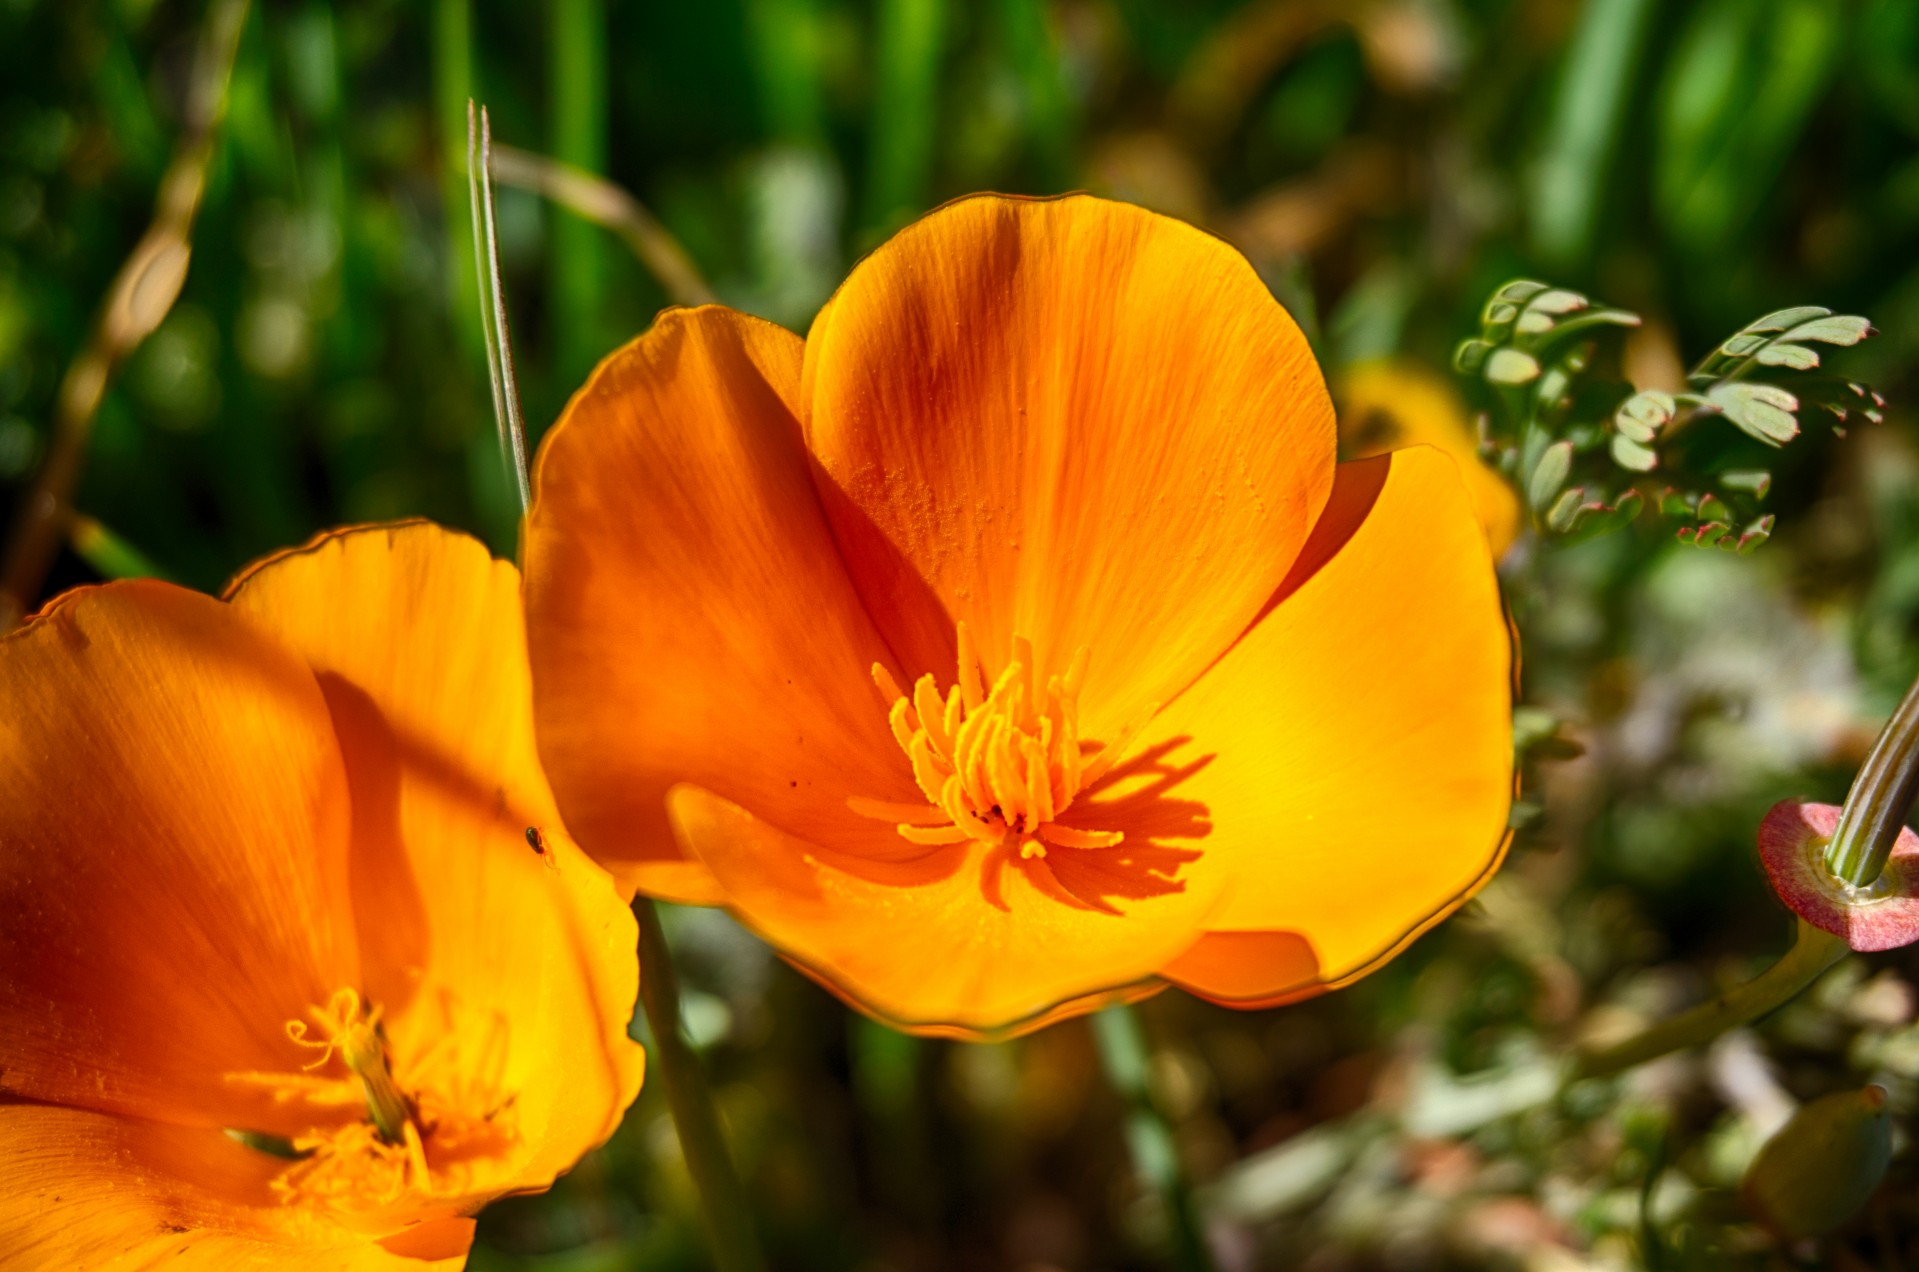 Bright orange poppy wildflower grows in California wilderness.